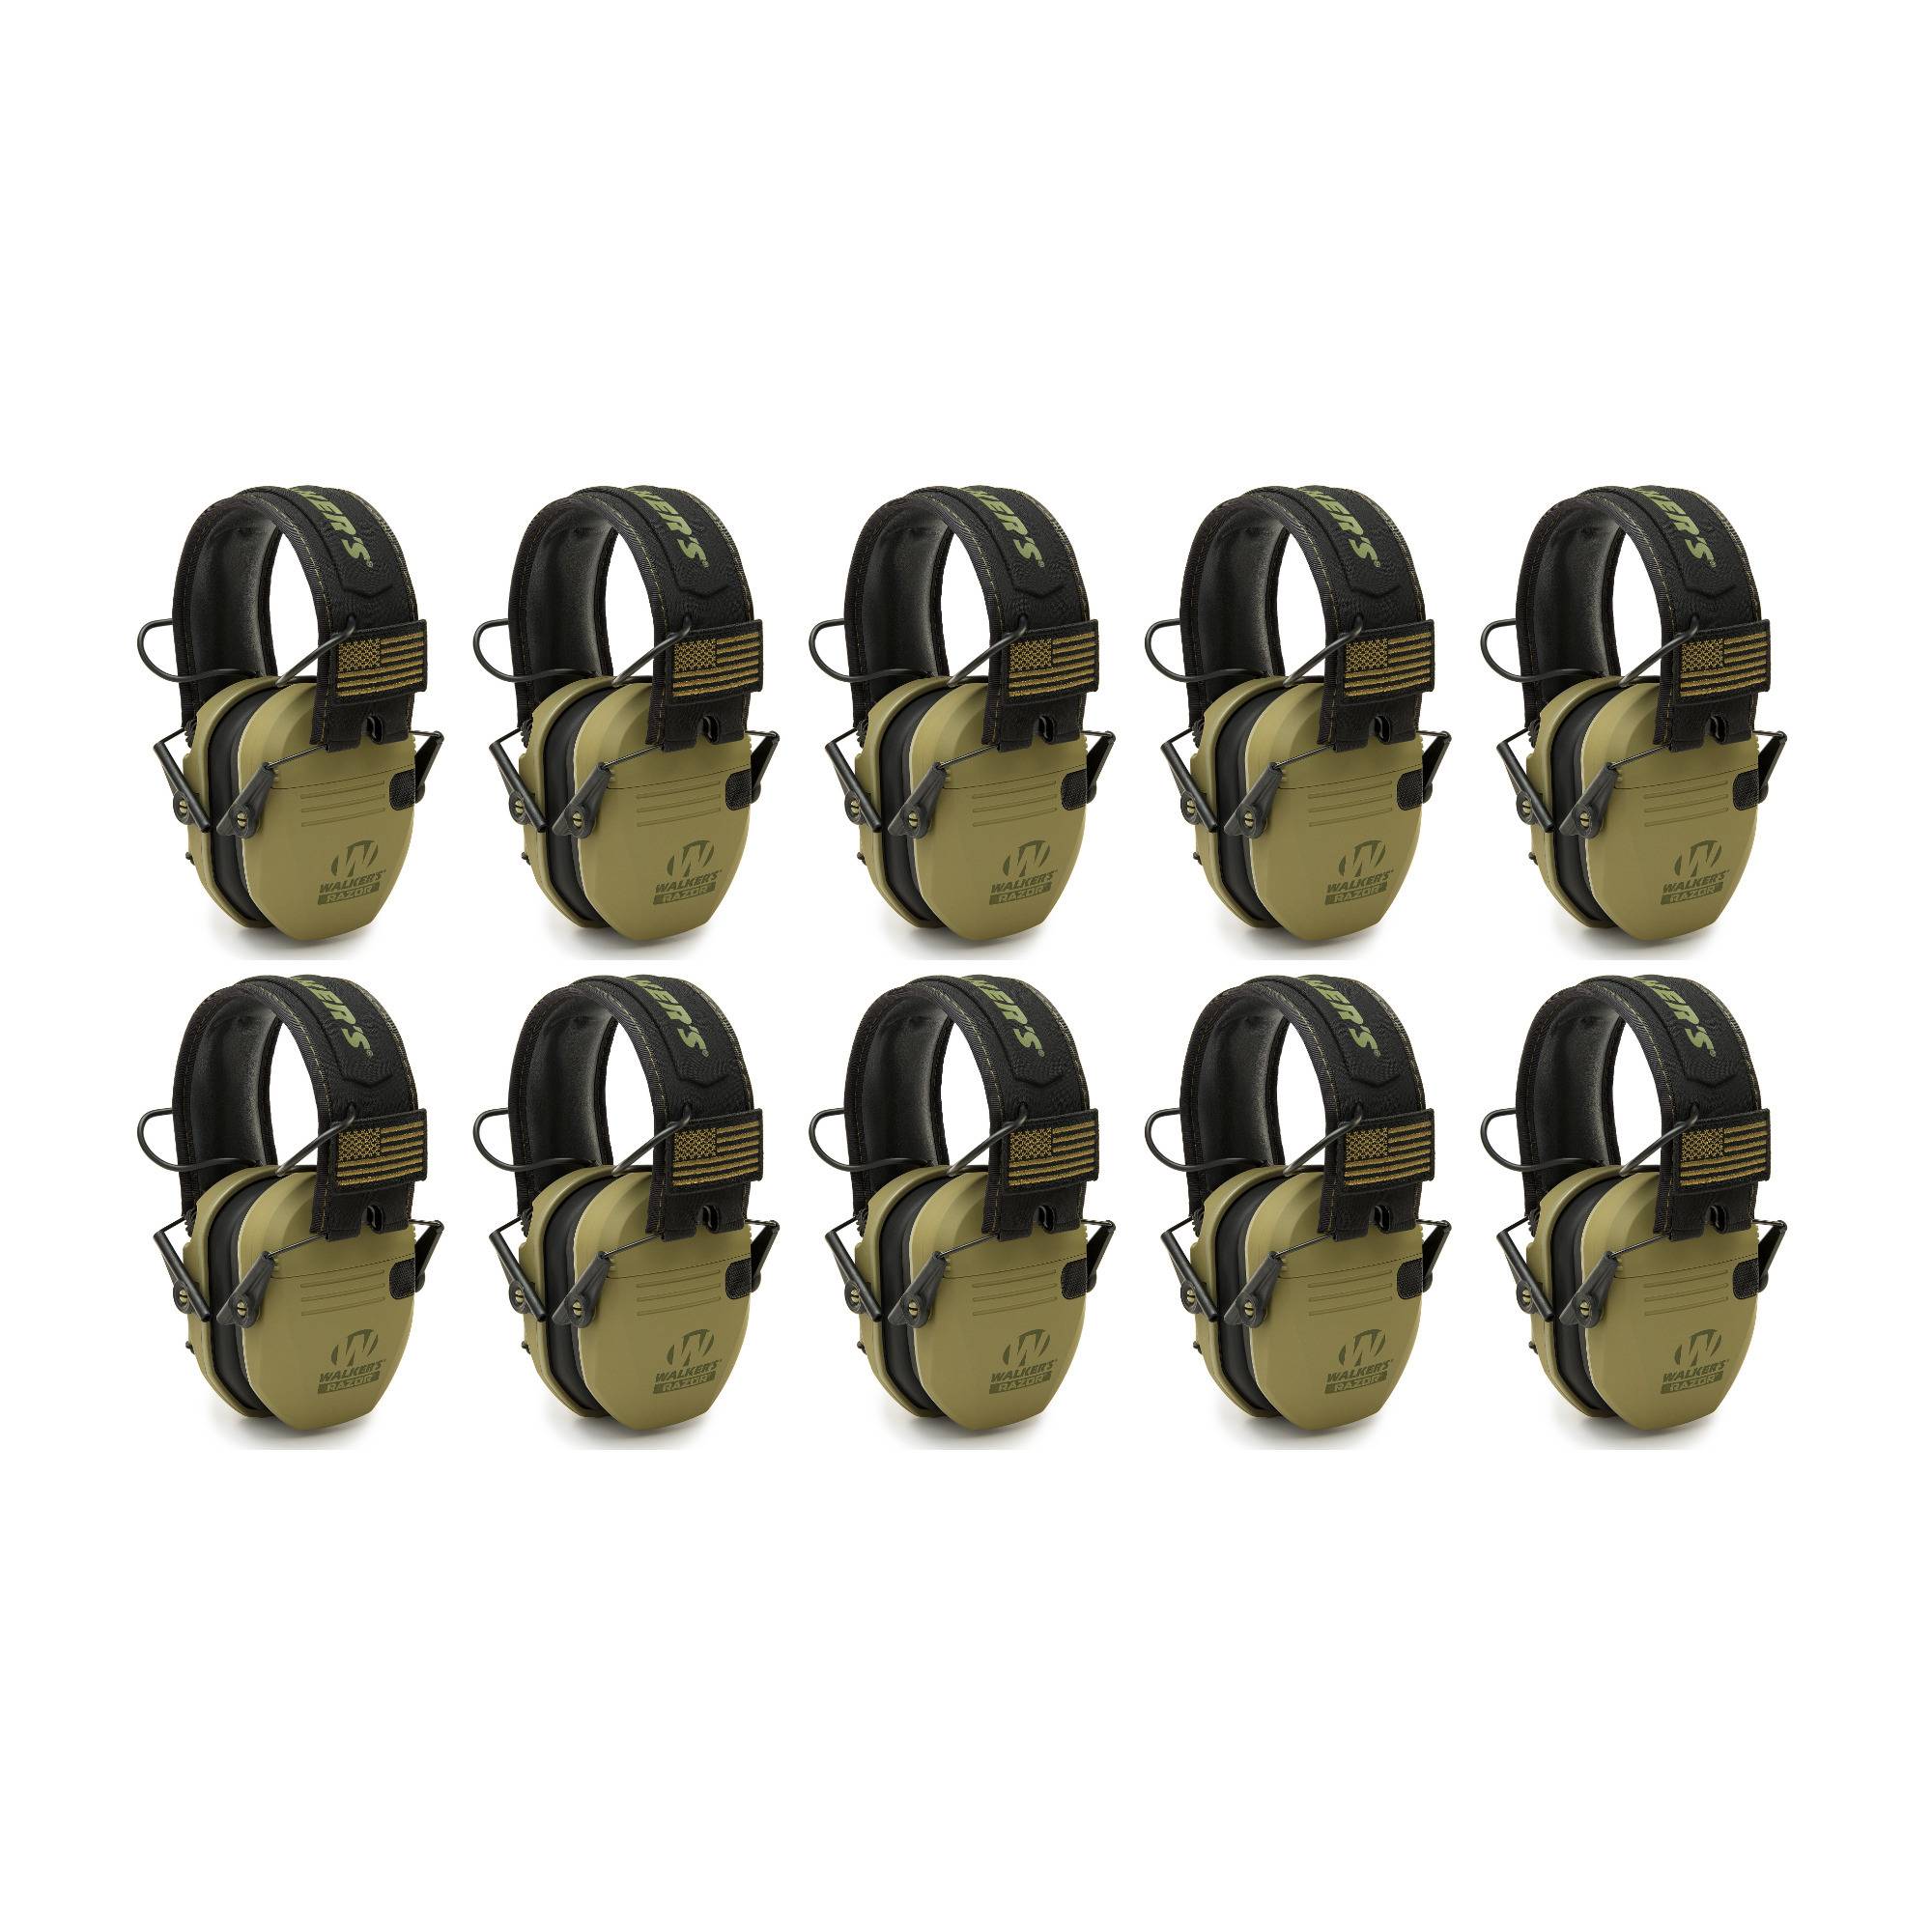 Walker's Razor Slim Ultra Low Profile Compact Design Adjustable Earmuffs (Green) 10-Pack